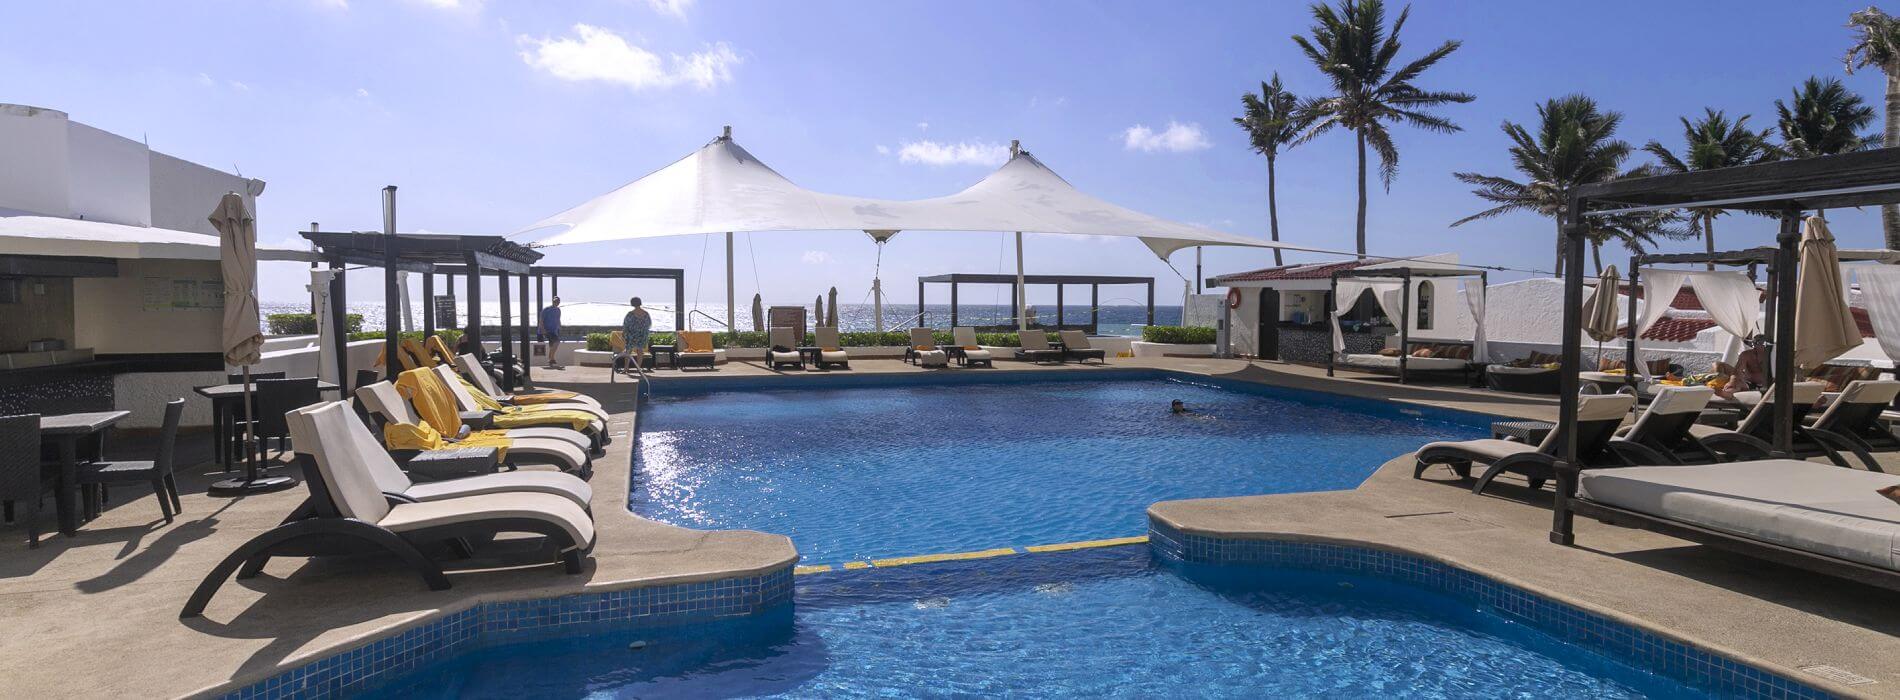 pool at all incluisve resort in cancun